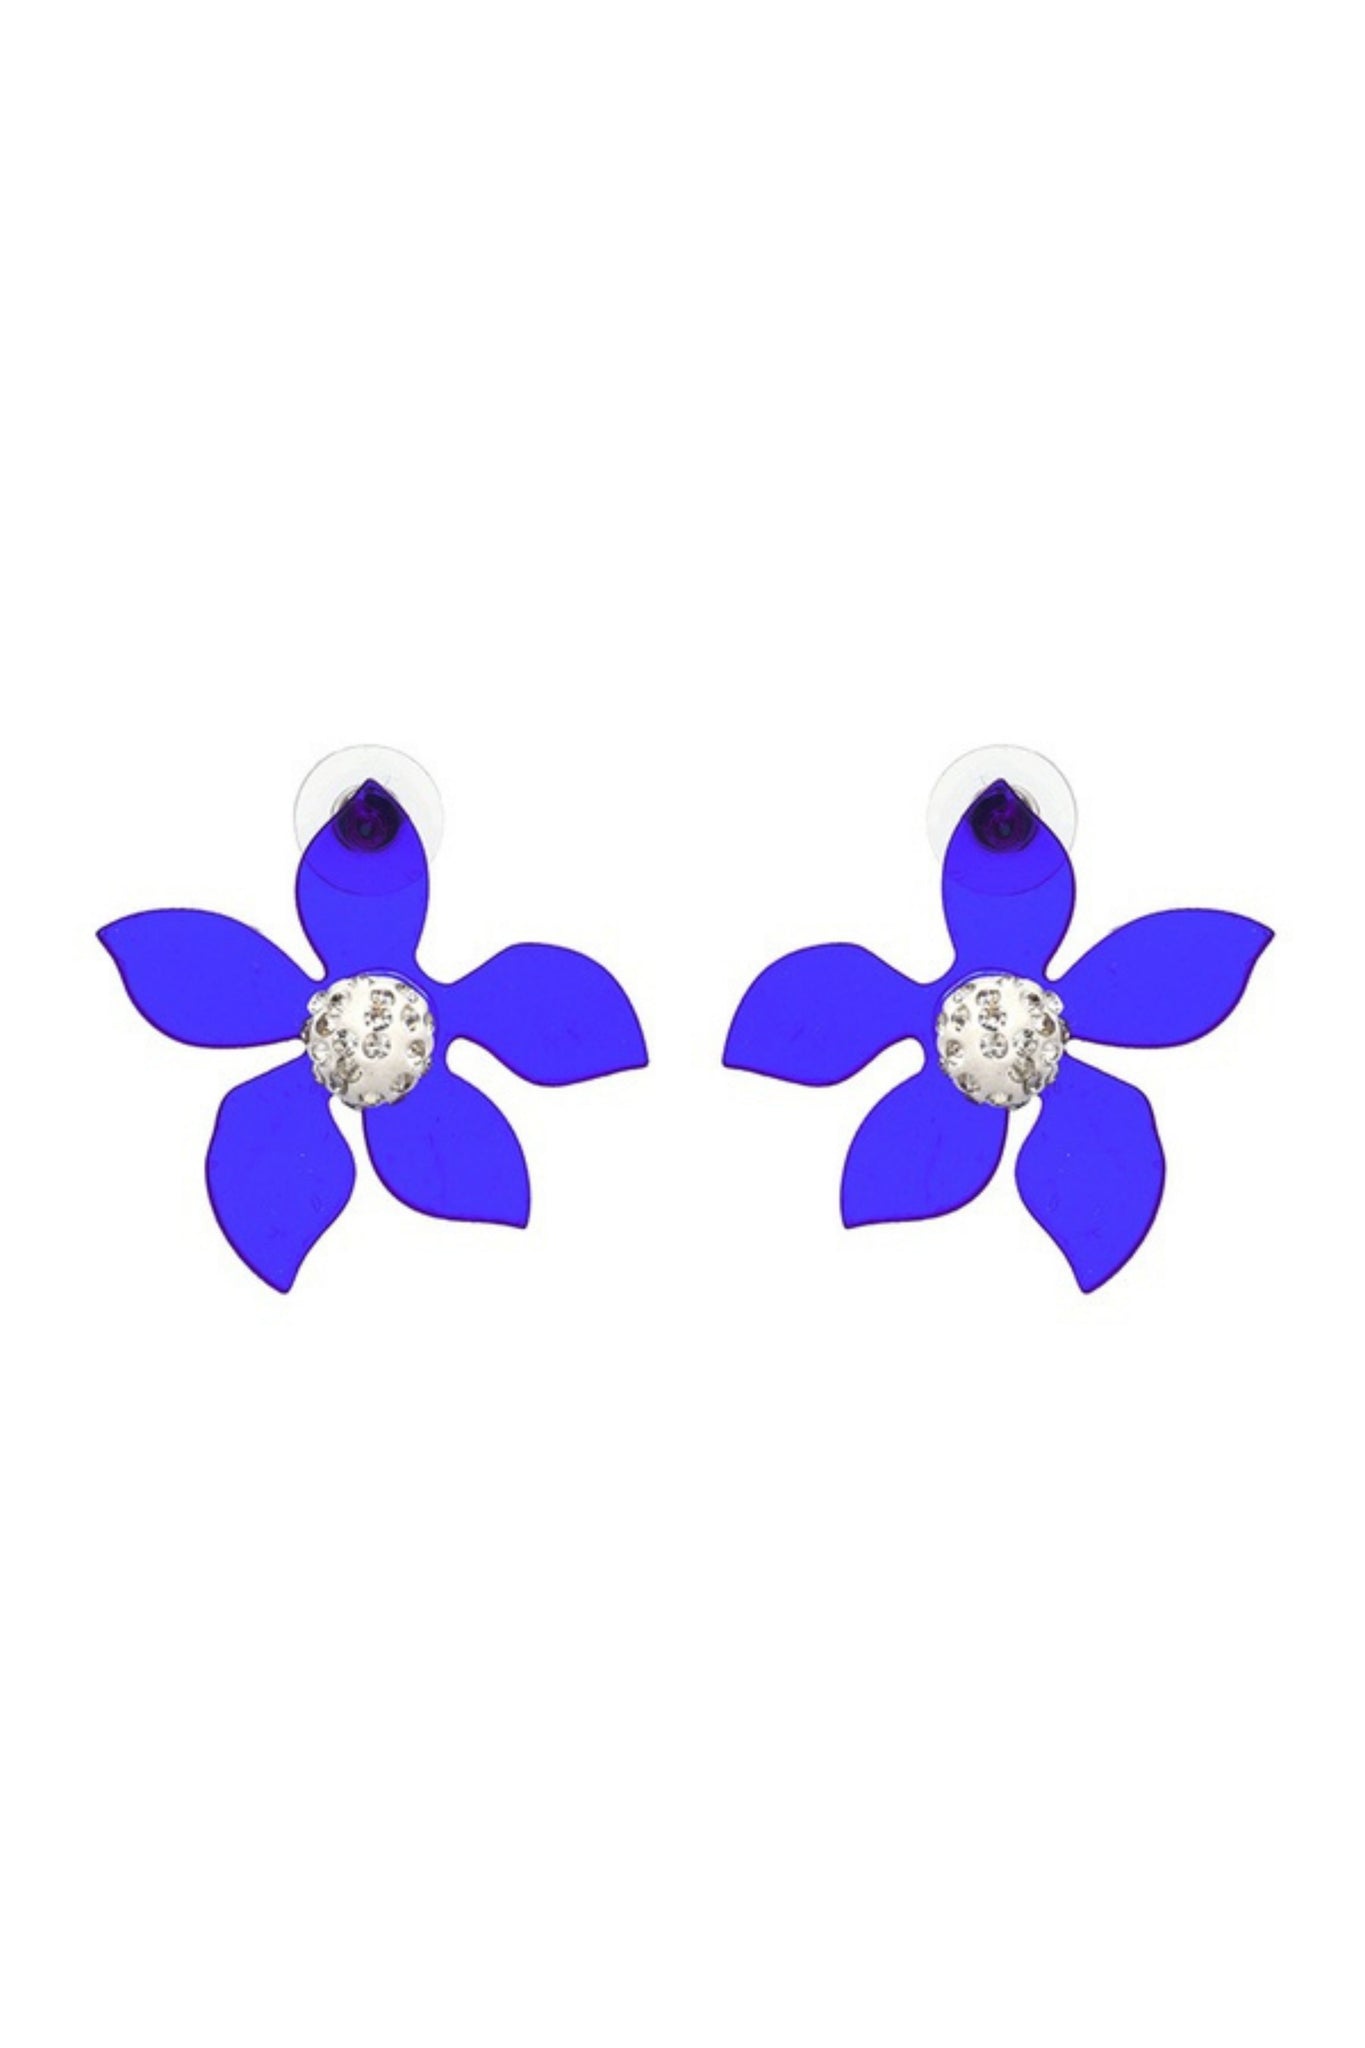 Transparent Resin Flower Stud - Blue